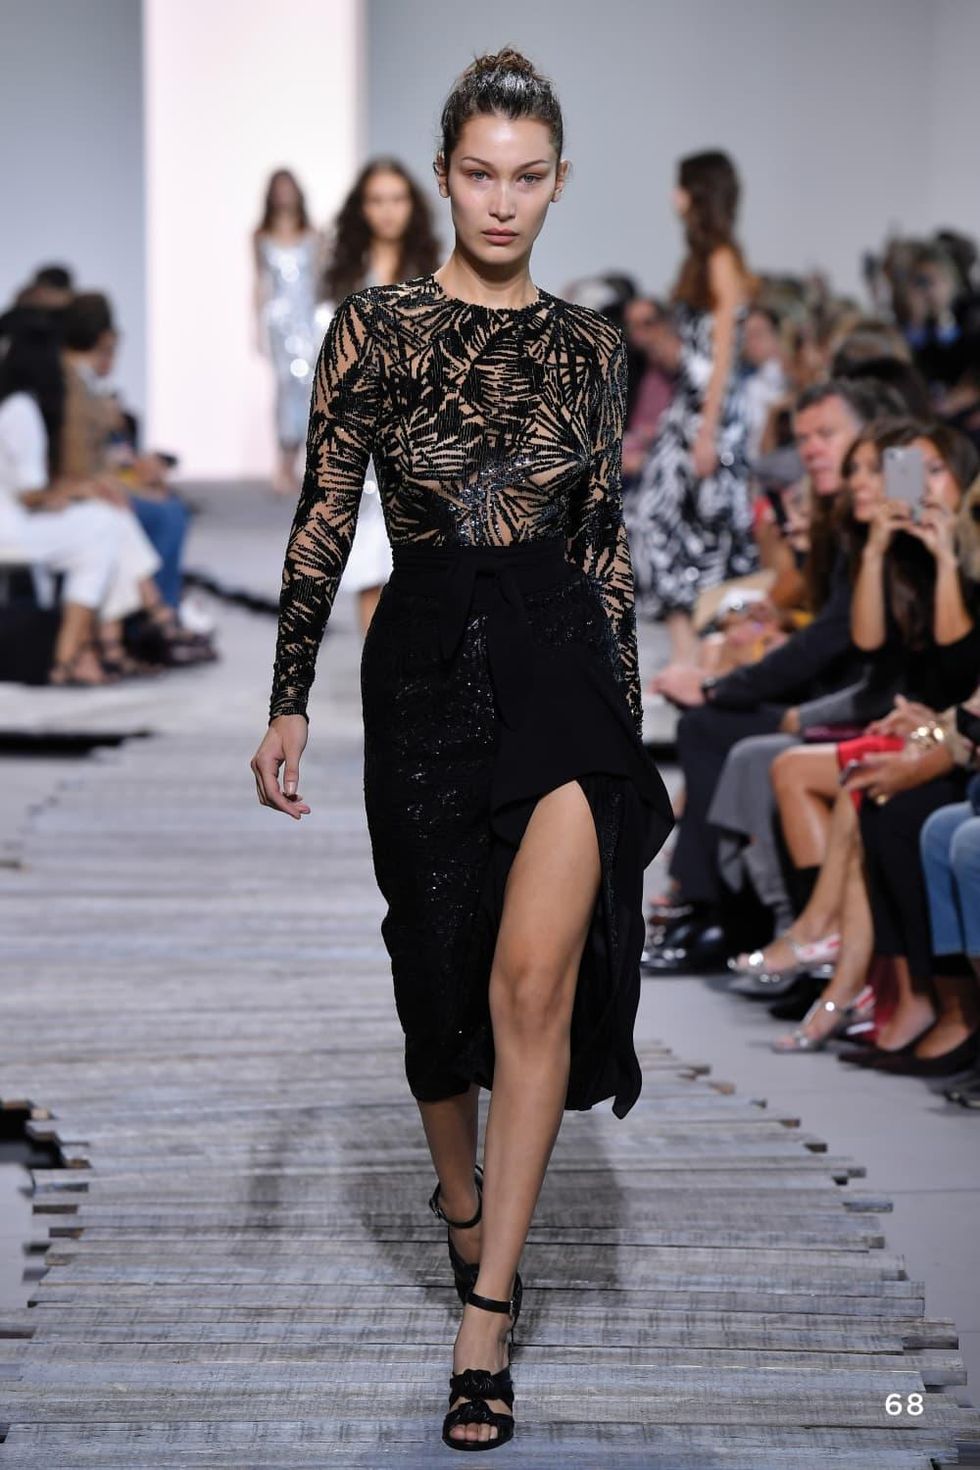 Michael Kors Collection spring 2018 New York Fashion Week look 68 Bella Hadid